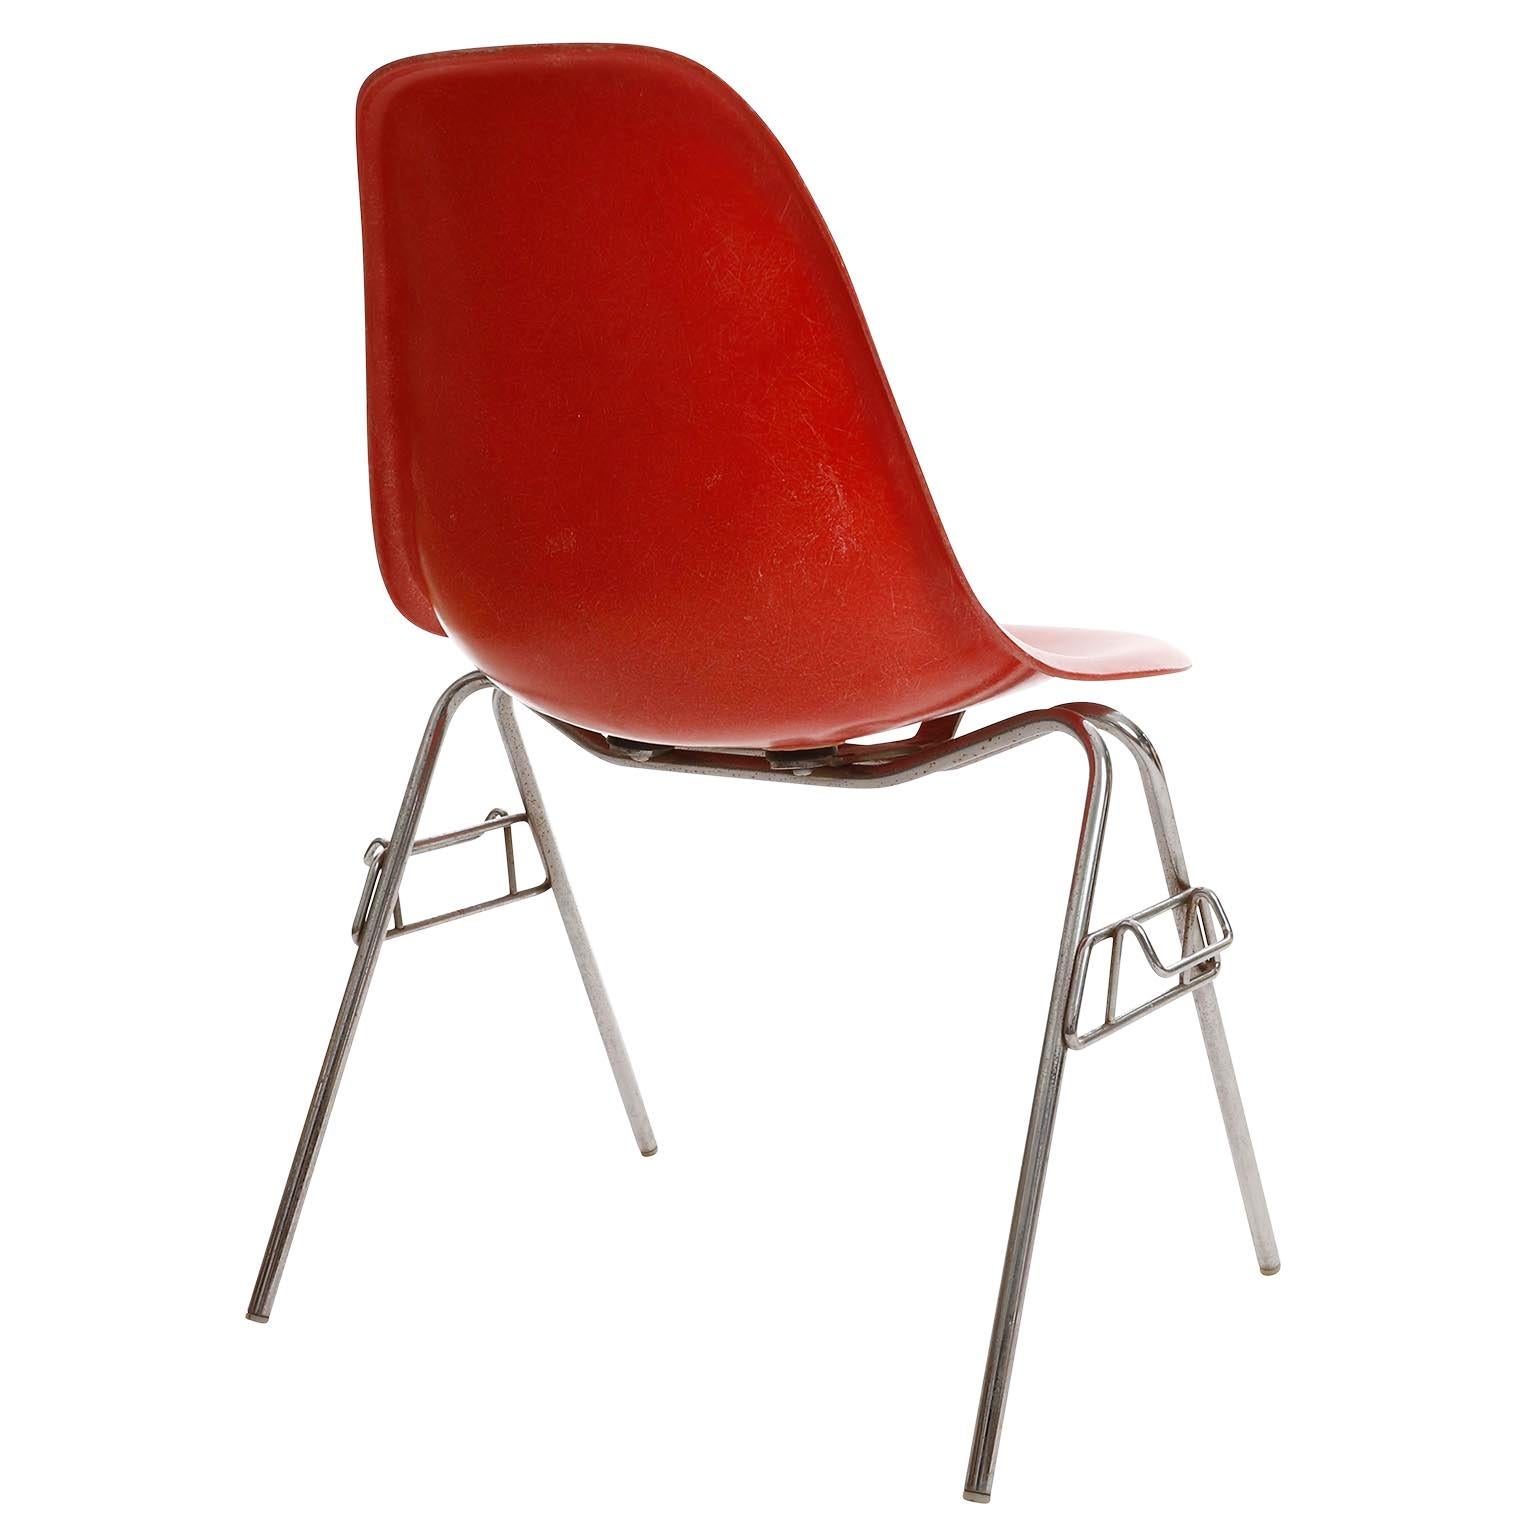 Fin du 20e siècle Six chaises empilables Charles & Ray Eames, Herman Miller, Red Fiberglass, 1974. en vente